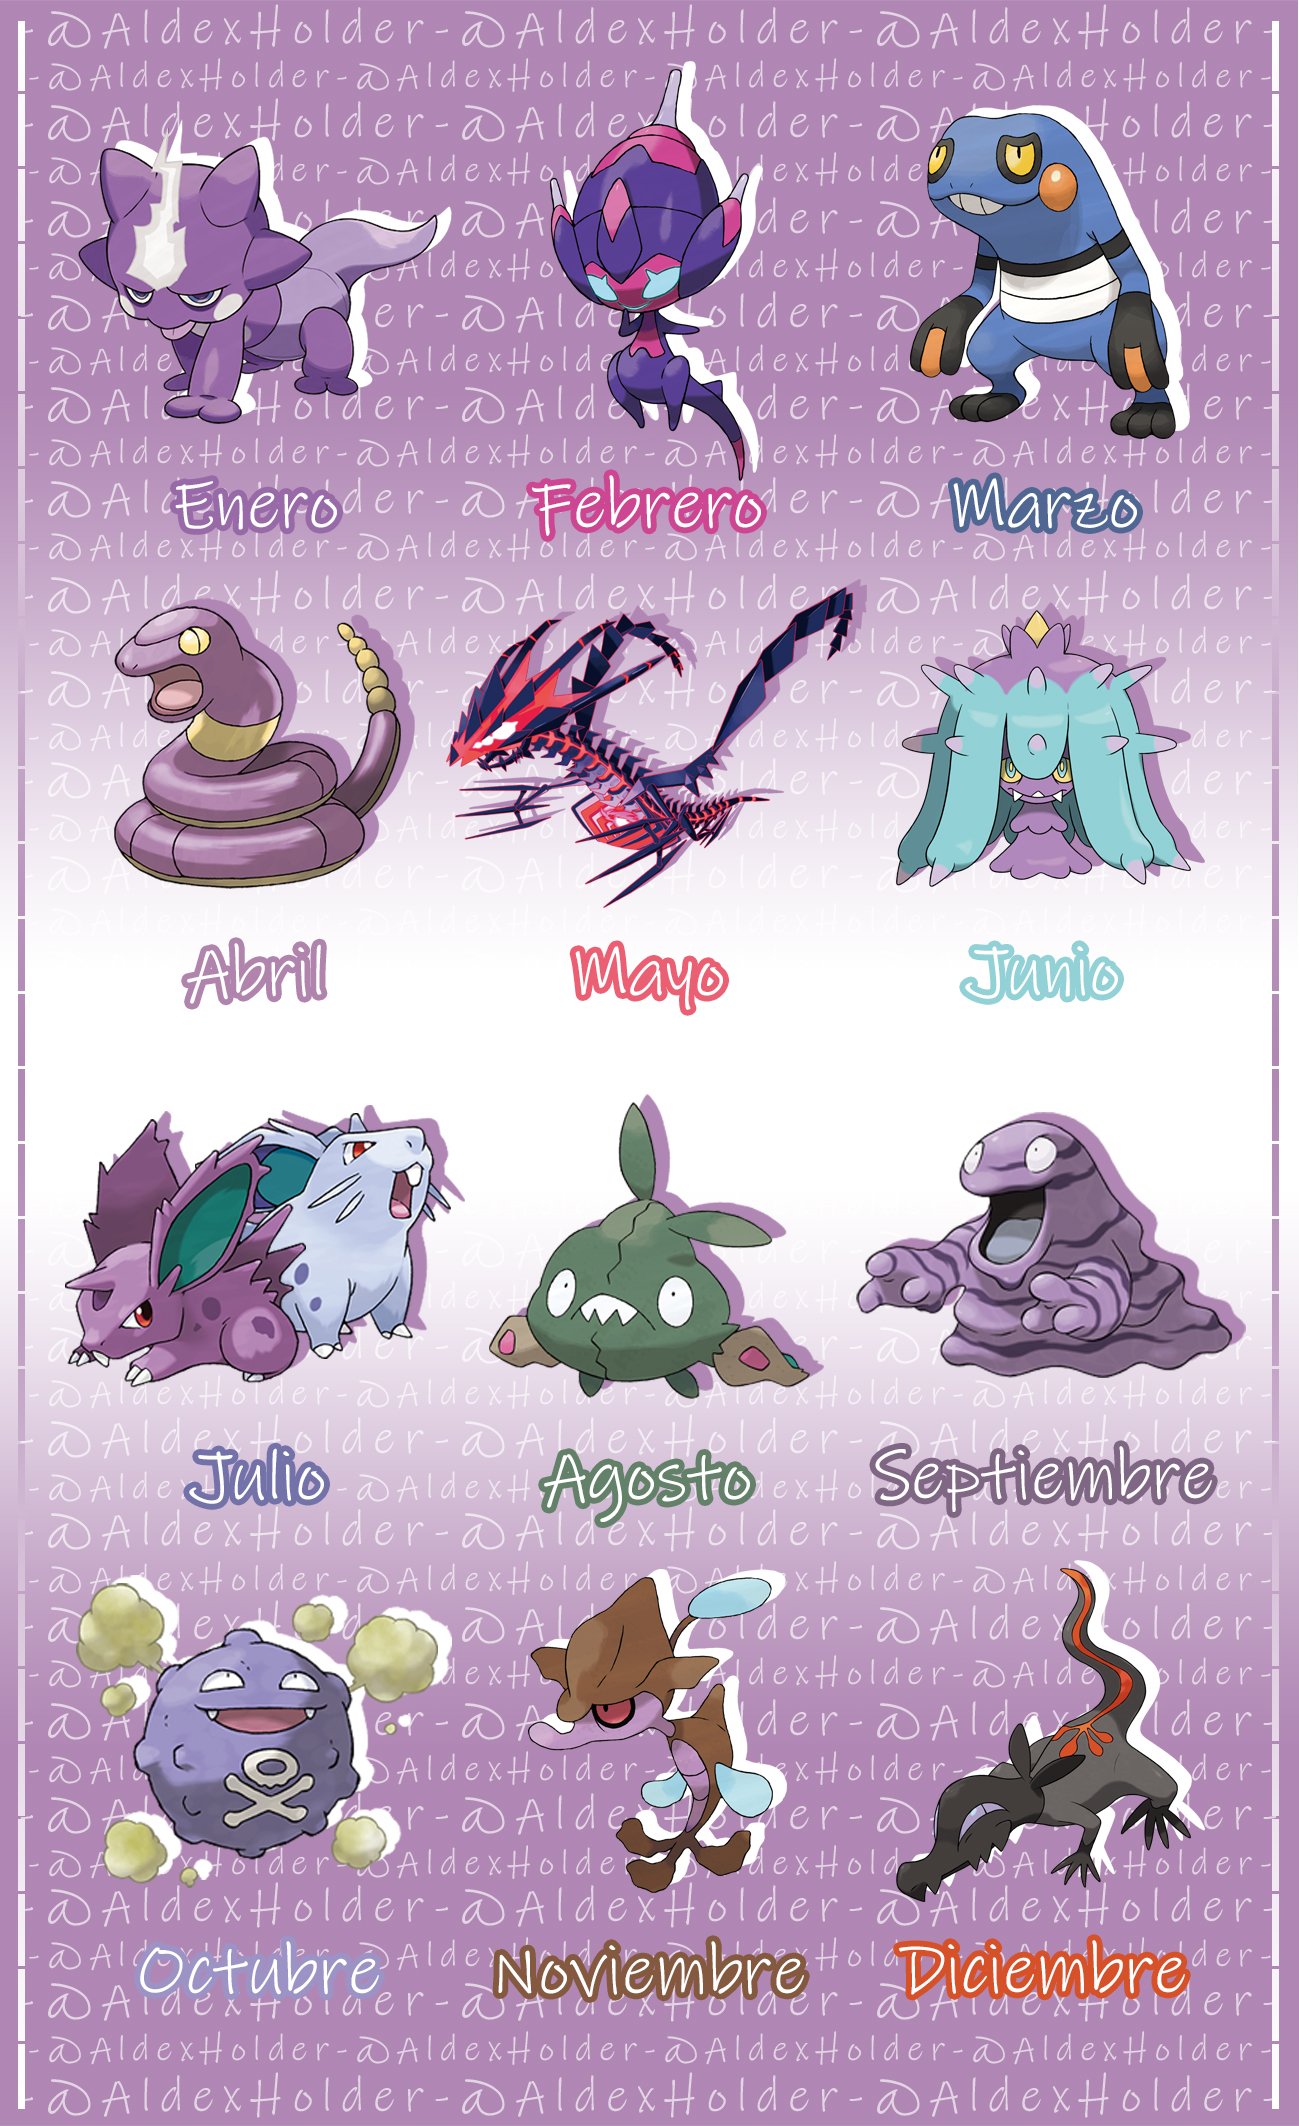 Tipo Veneno (Pokémon) - Desciclopédia